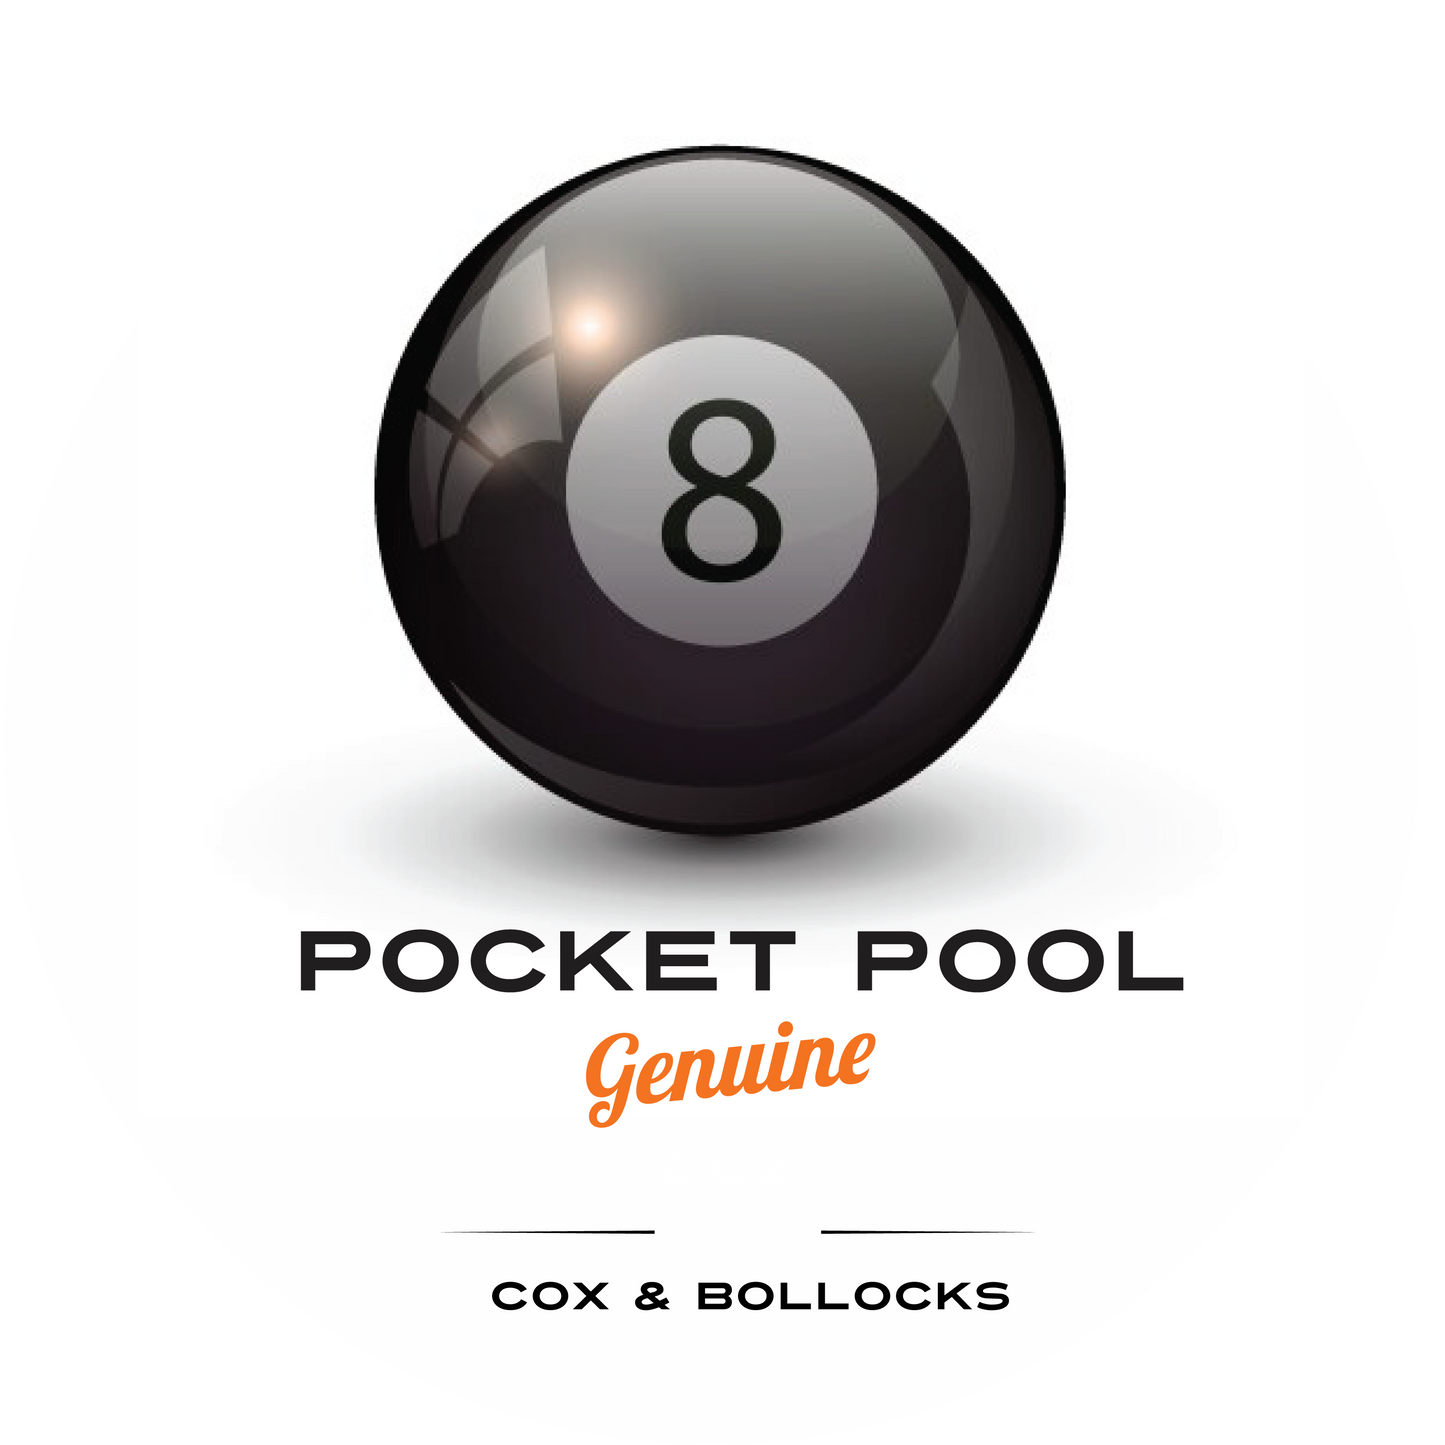 Pocket Pool Cream